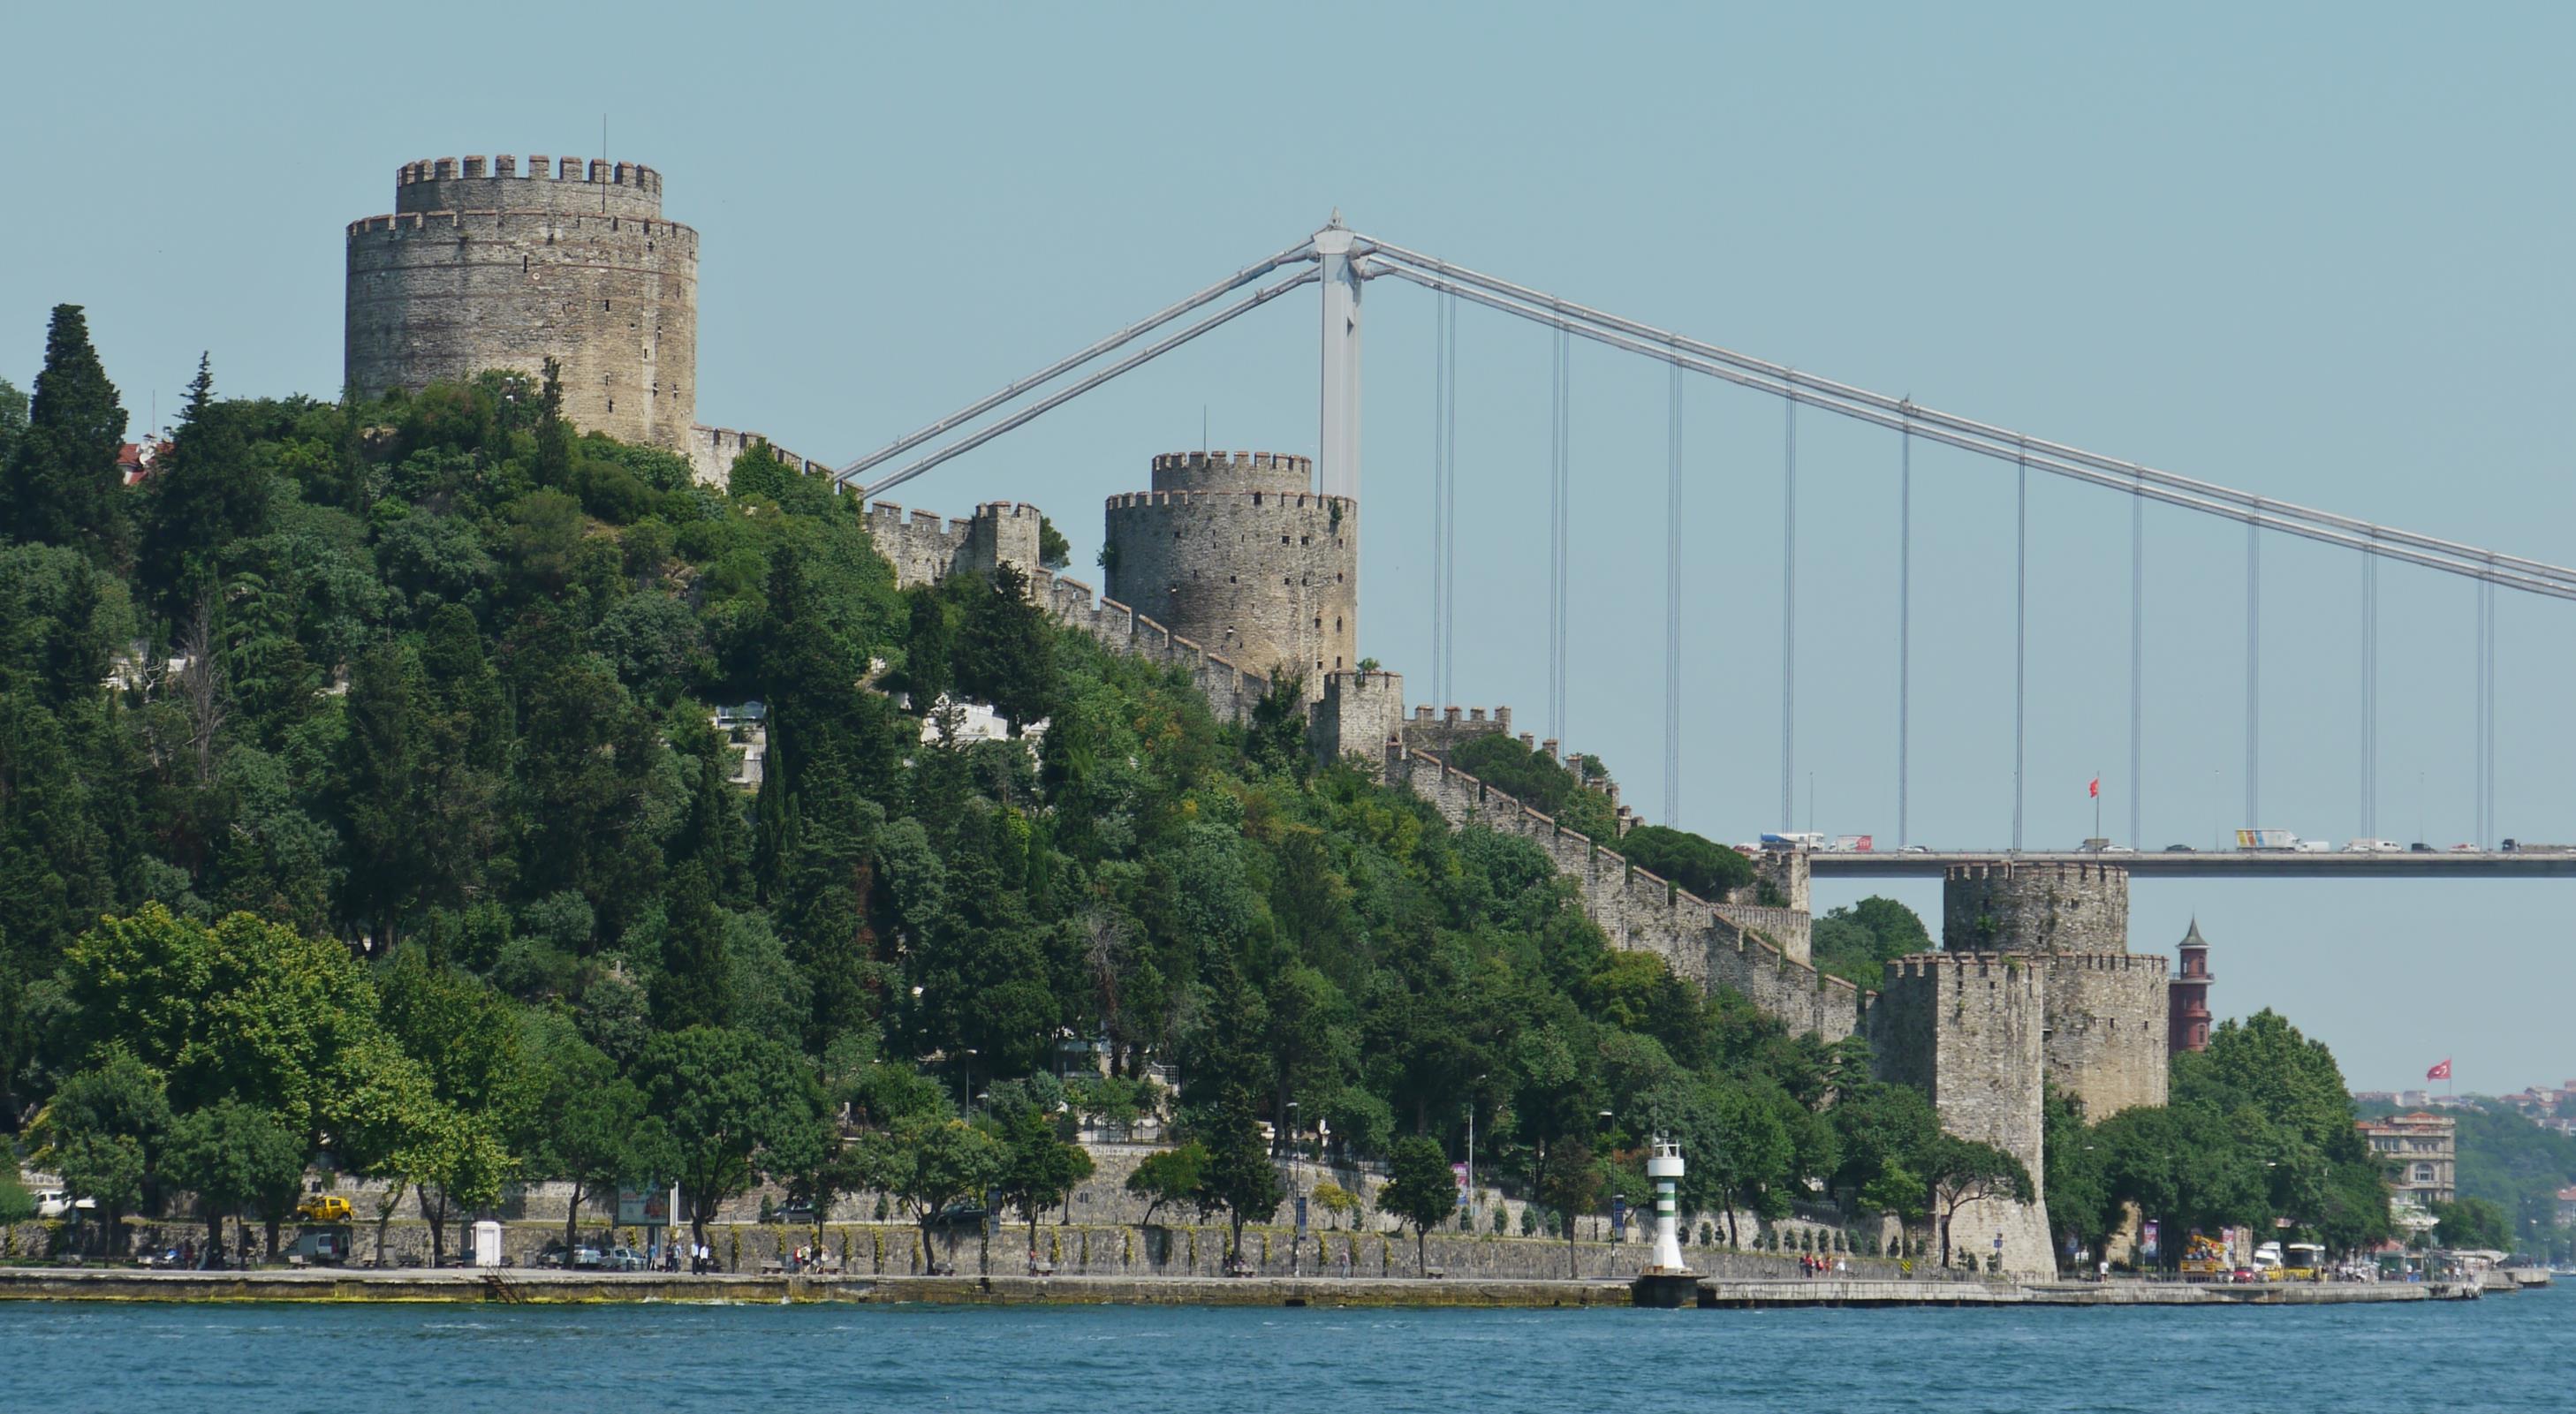 Rumelihisari Fortress and one of two bridges spanning the Bosphorus